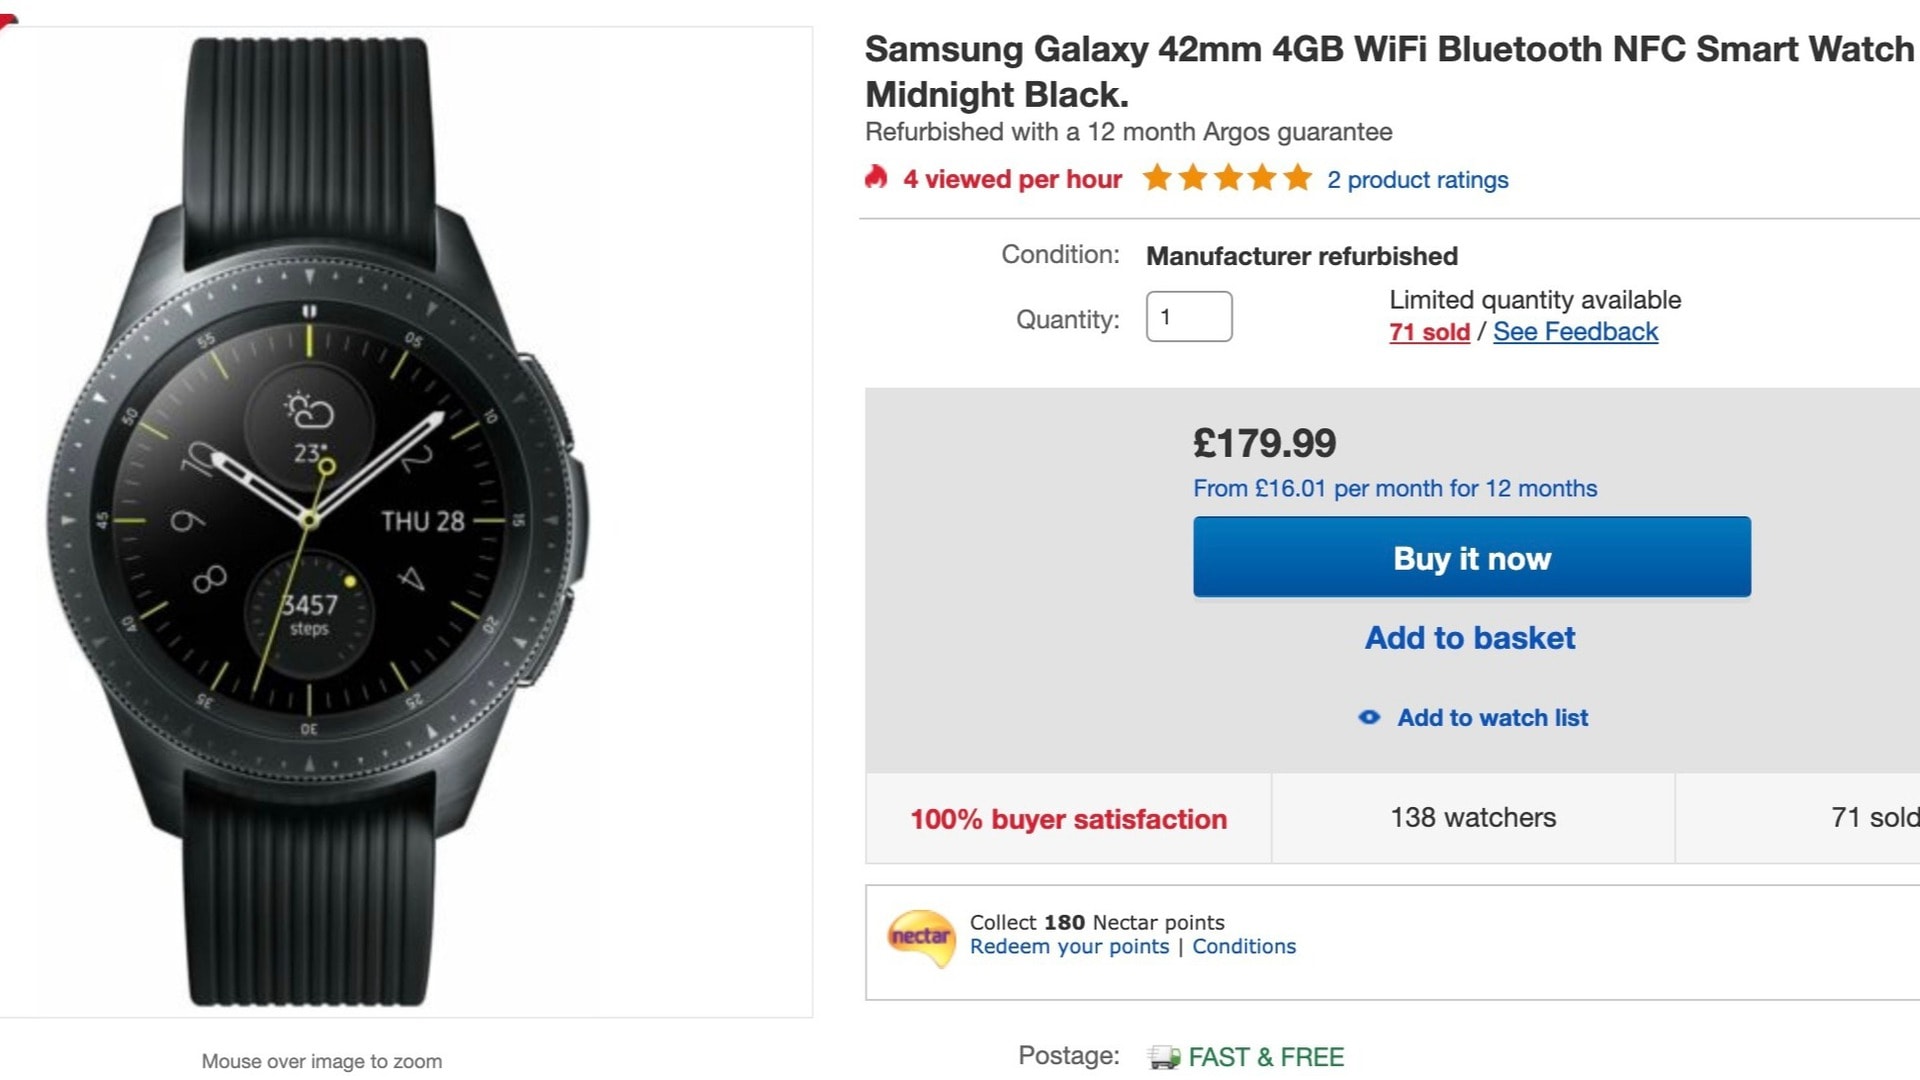 Samsung Galaxy Watch refurbished deal at Argos via eBay